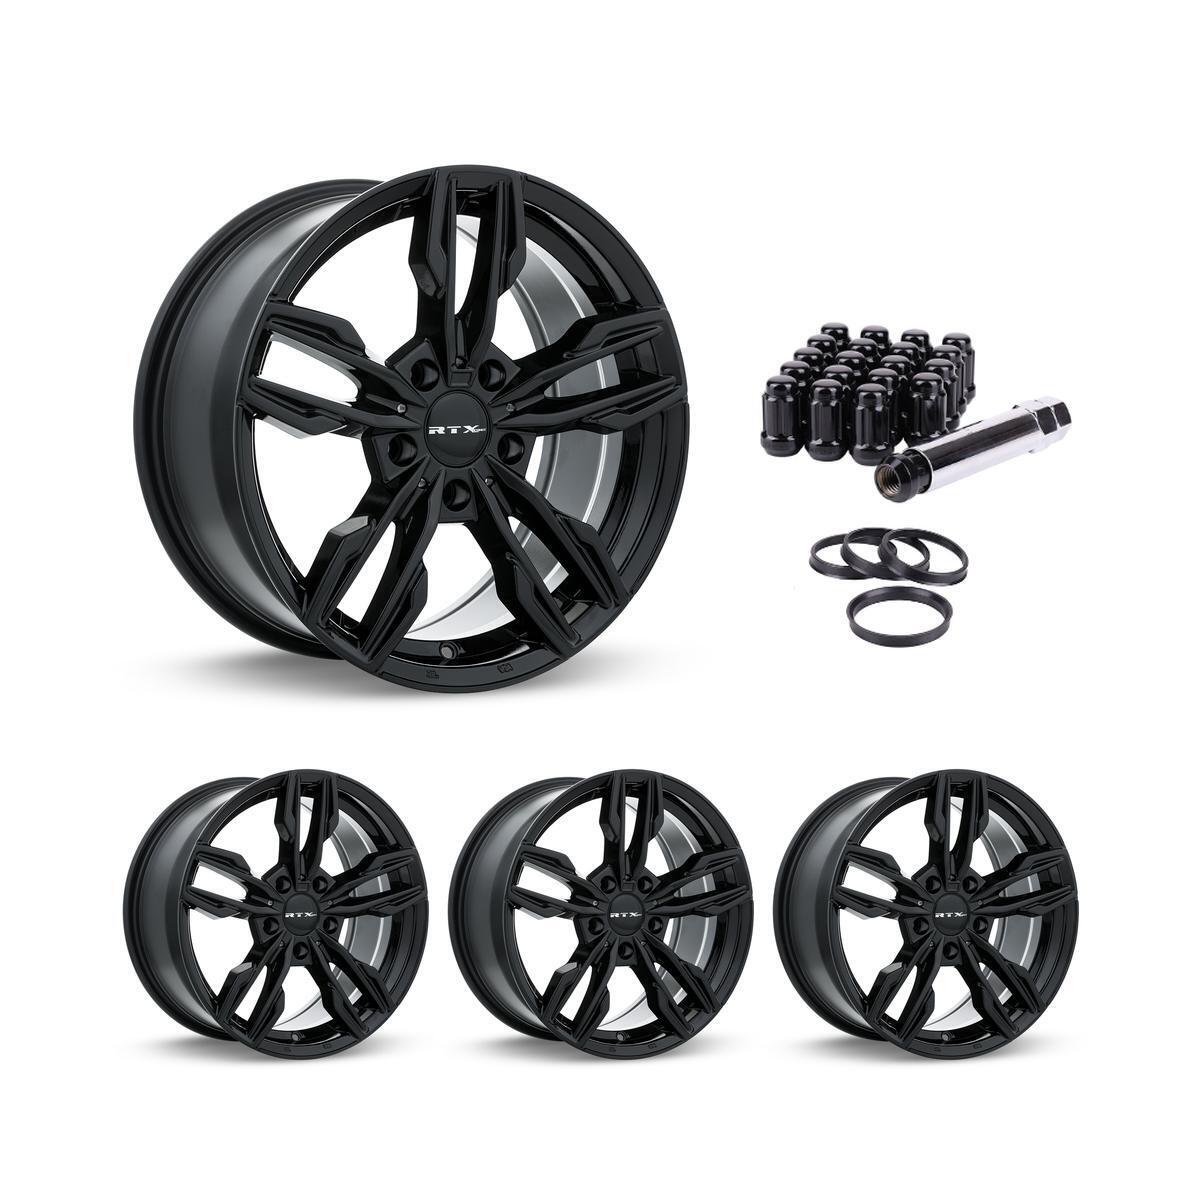 Wheel Rims Set with Black Lug Nuts Kit for 01-06 BMW 330Ci P861711 17 inch